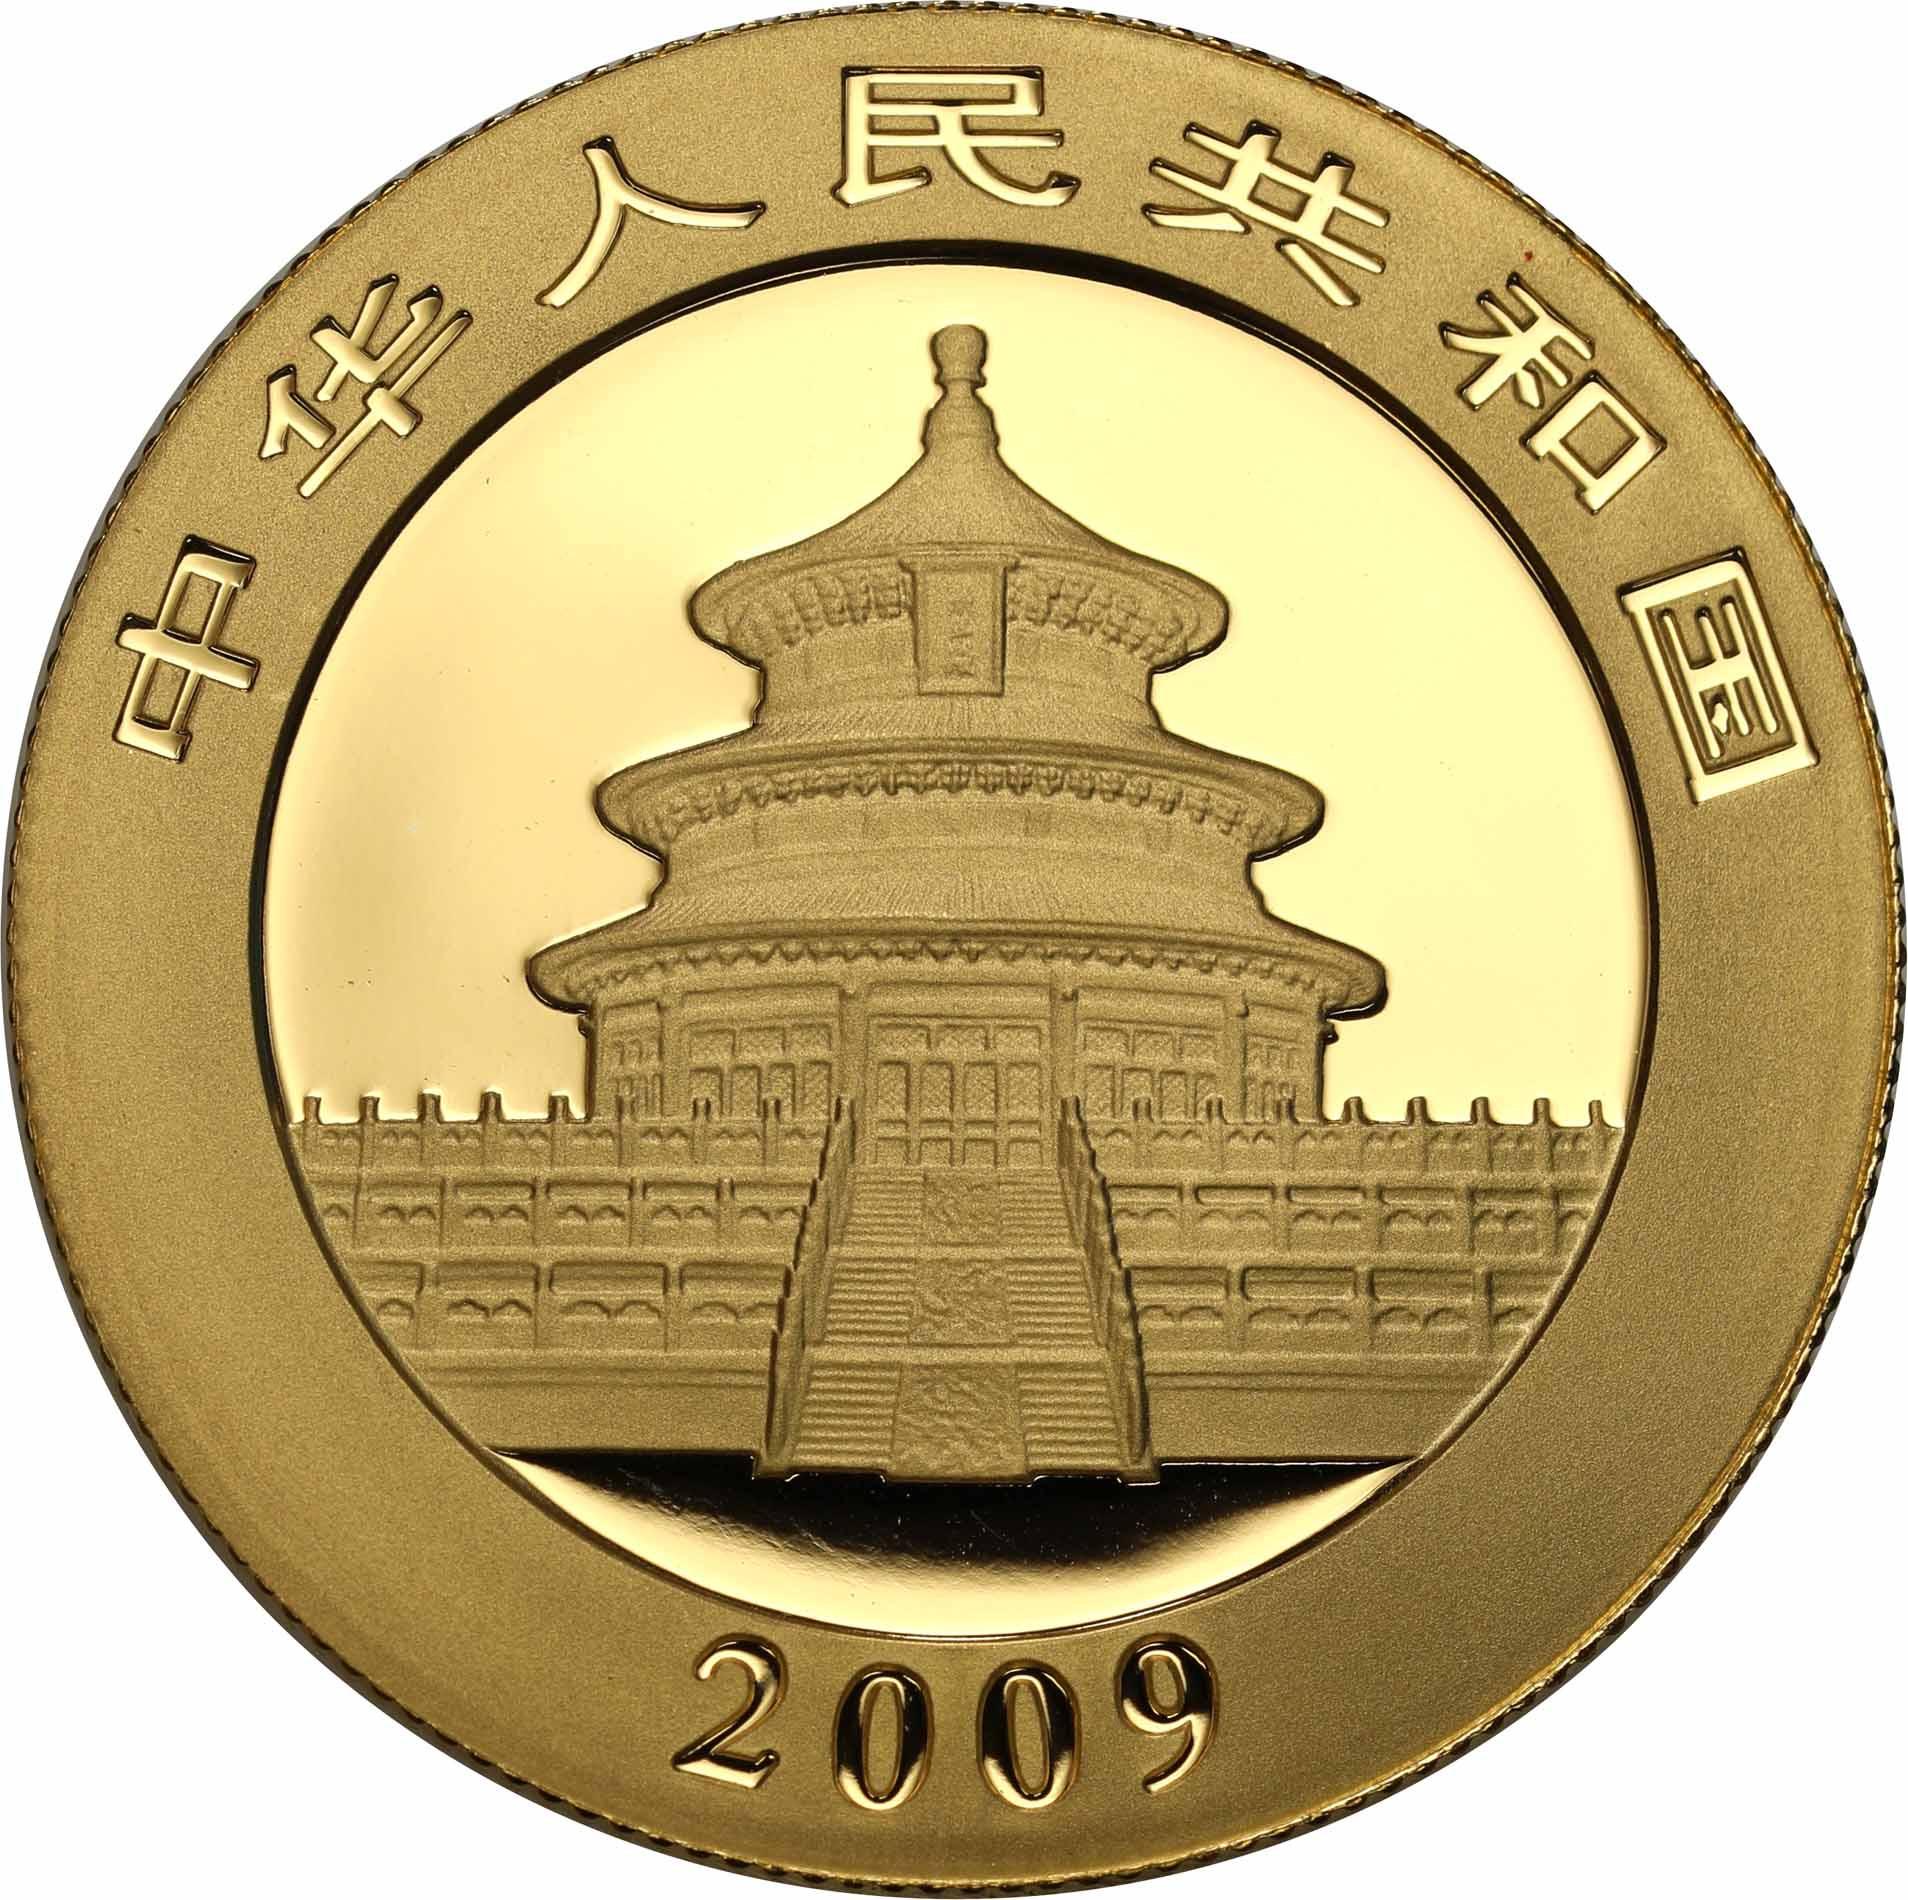 Chiny 200 Yuan (juanów) 2009 Panda Wielka 1/2 uncji złota